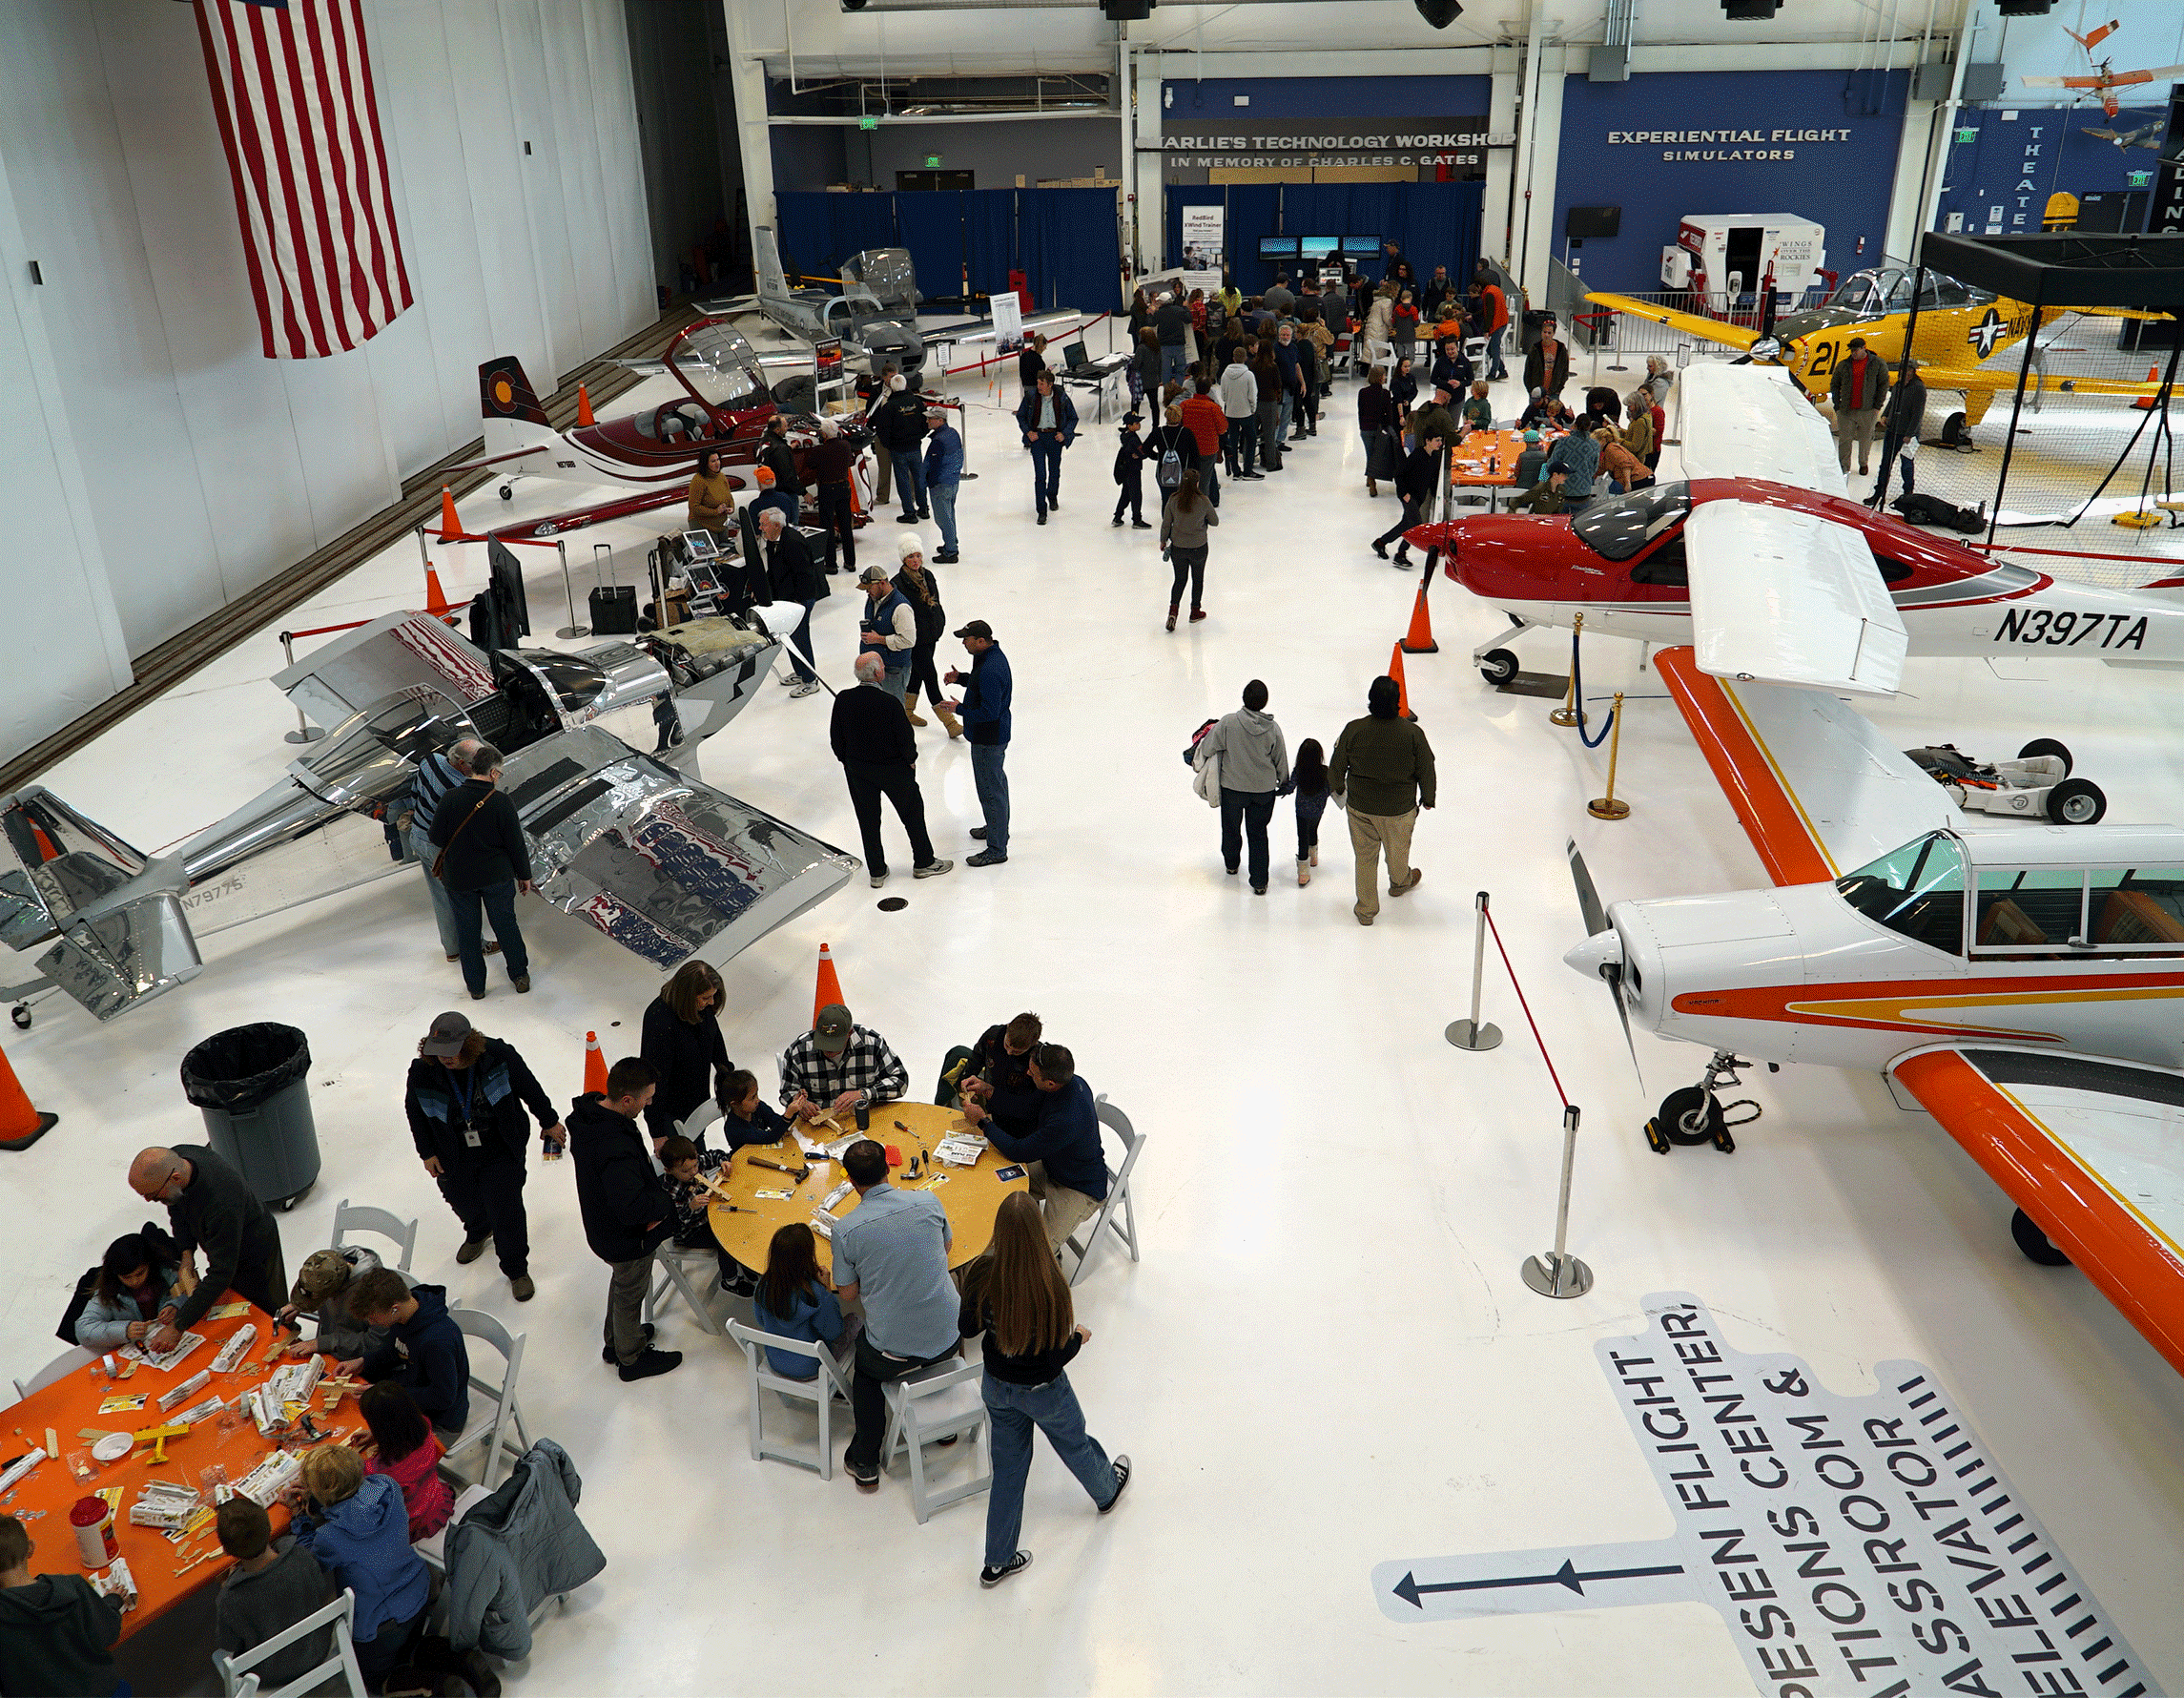 Exploration of Flight hangar full of guests